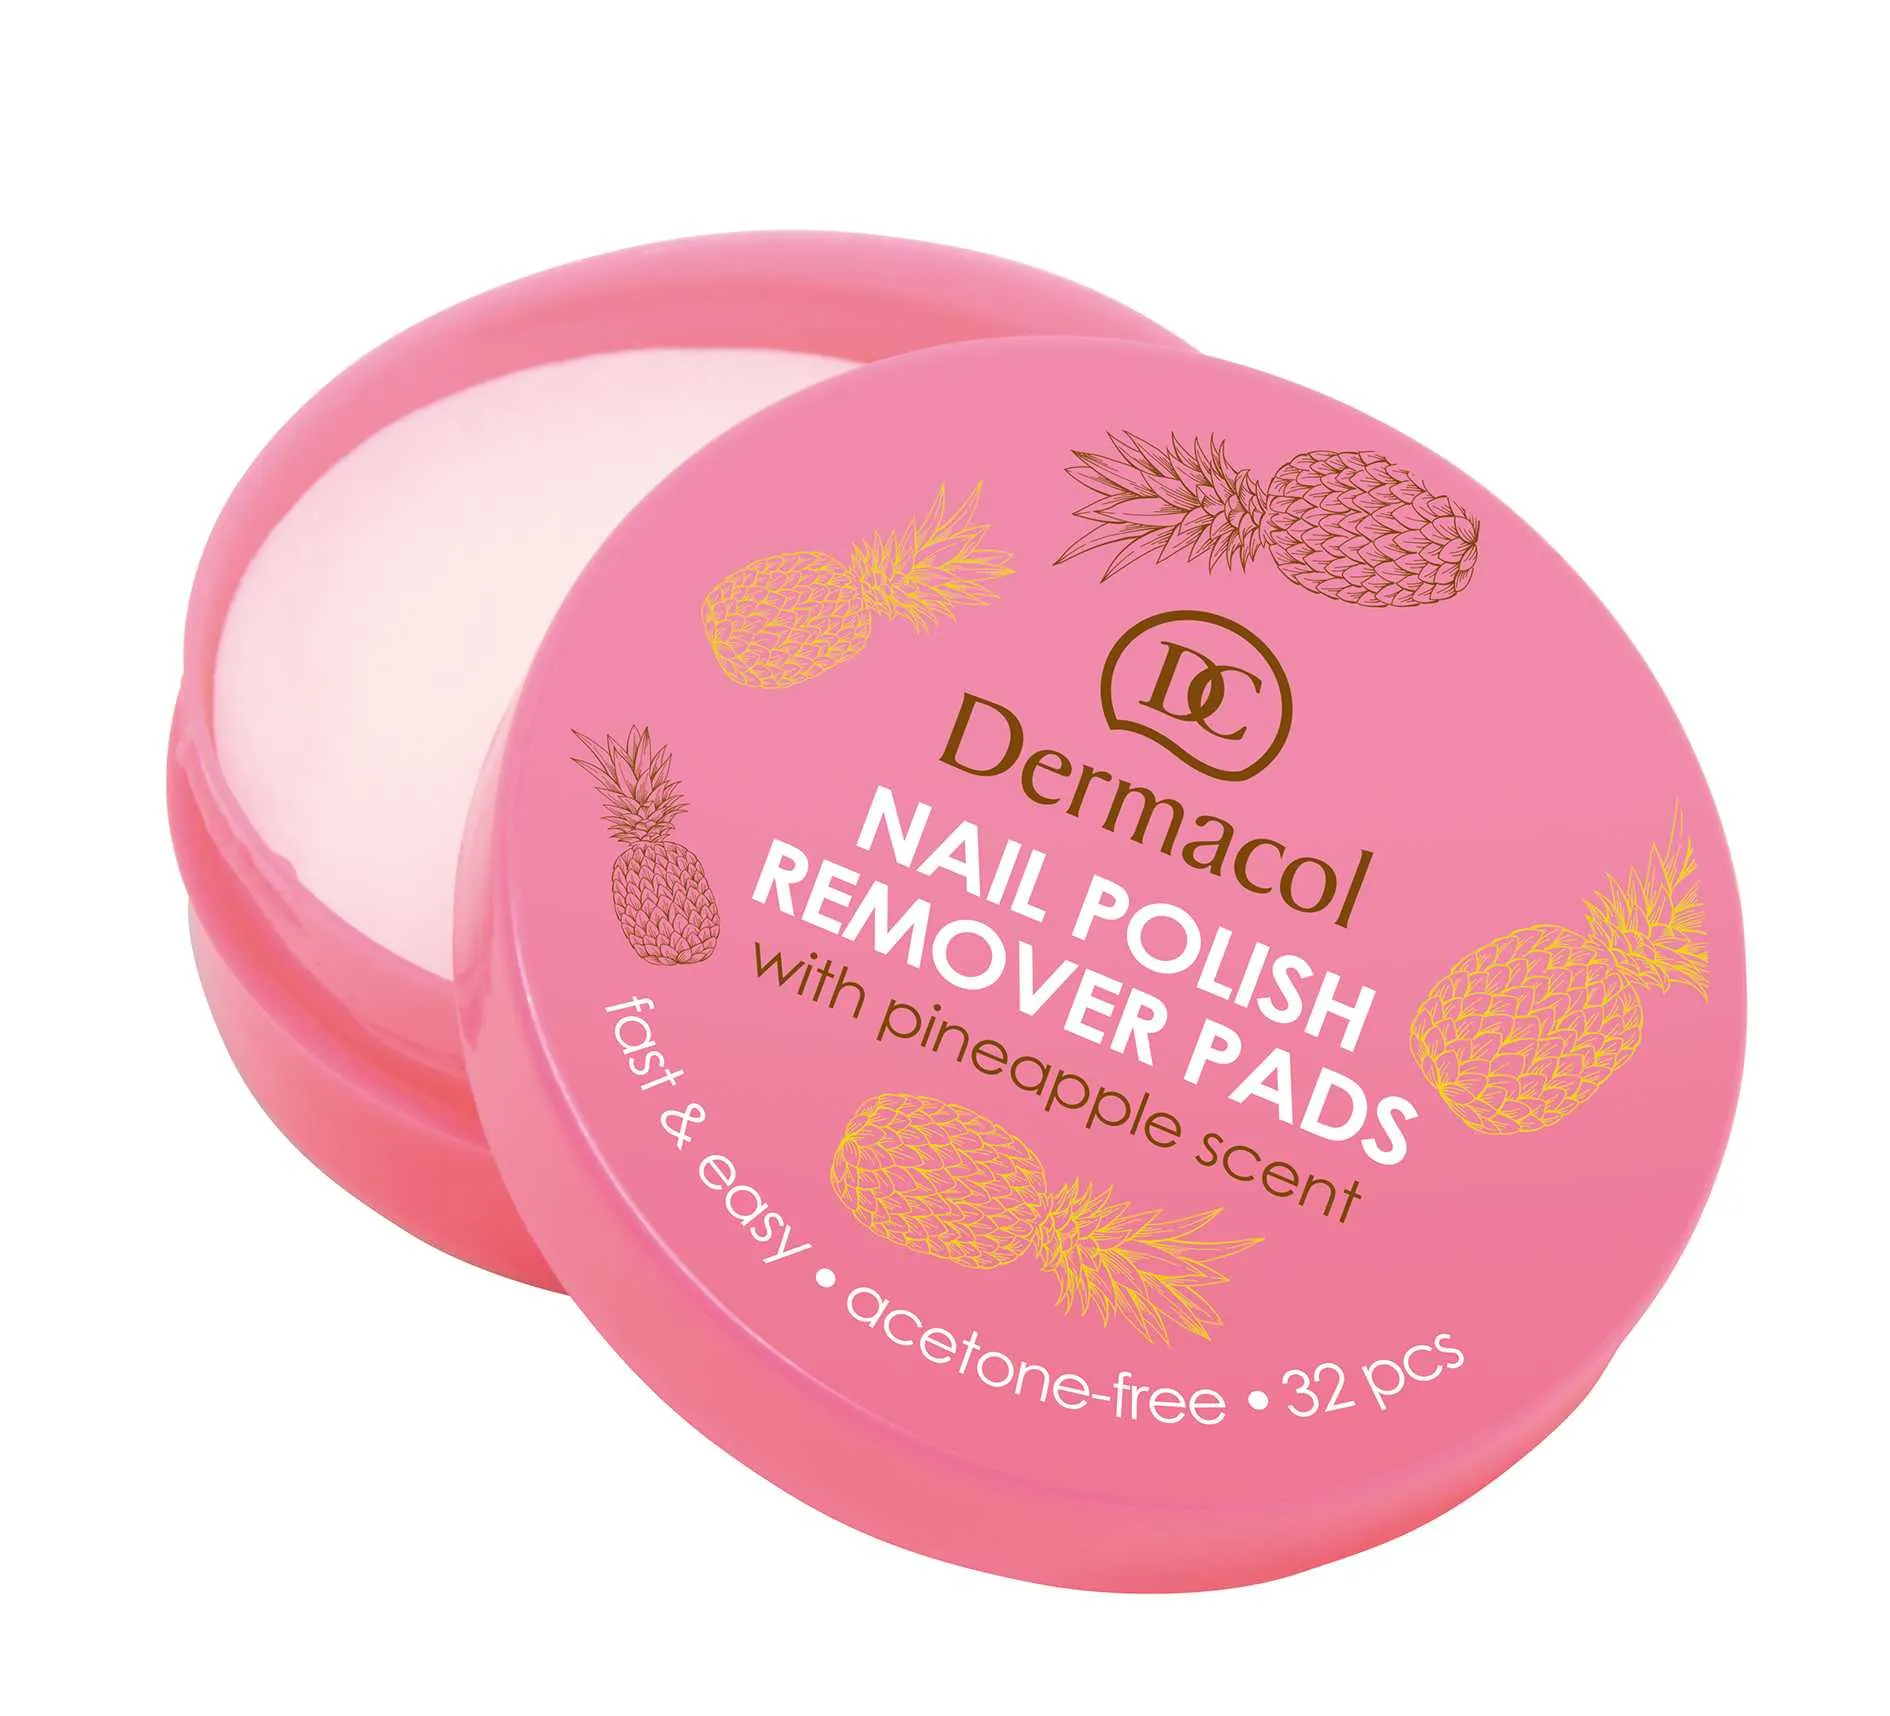 Dermacol Nail polish remover pads